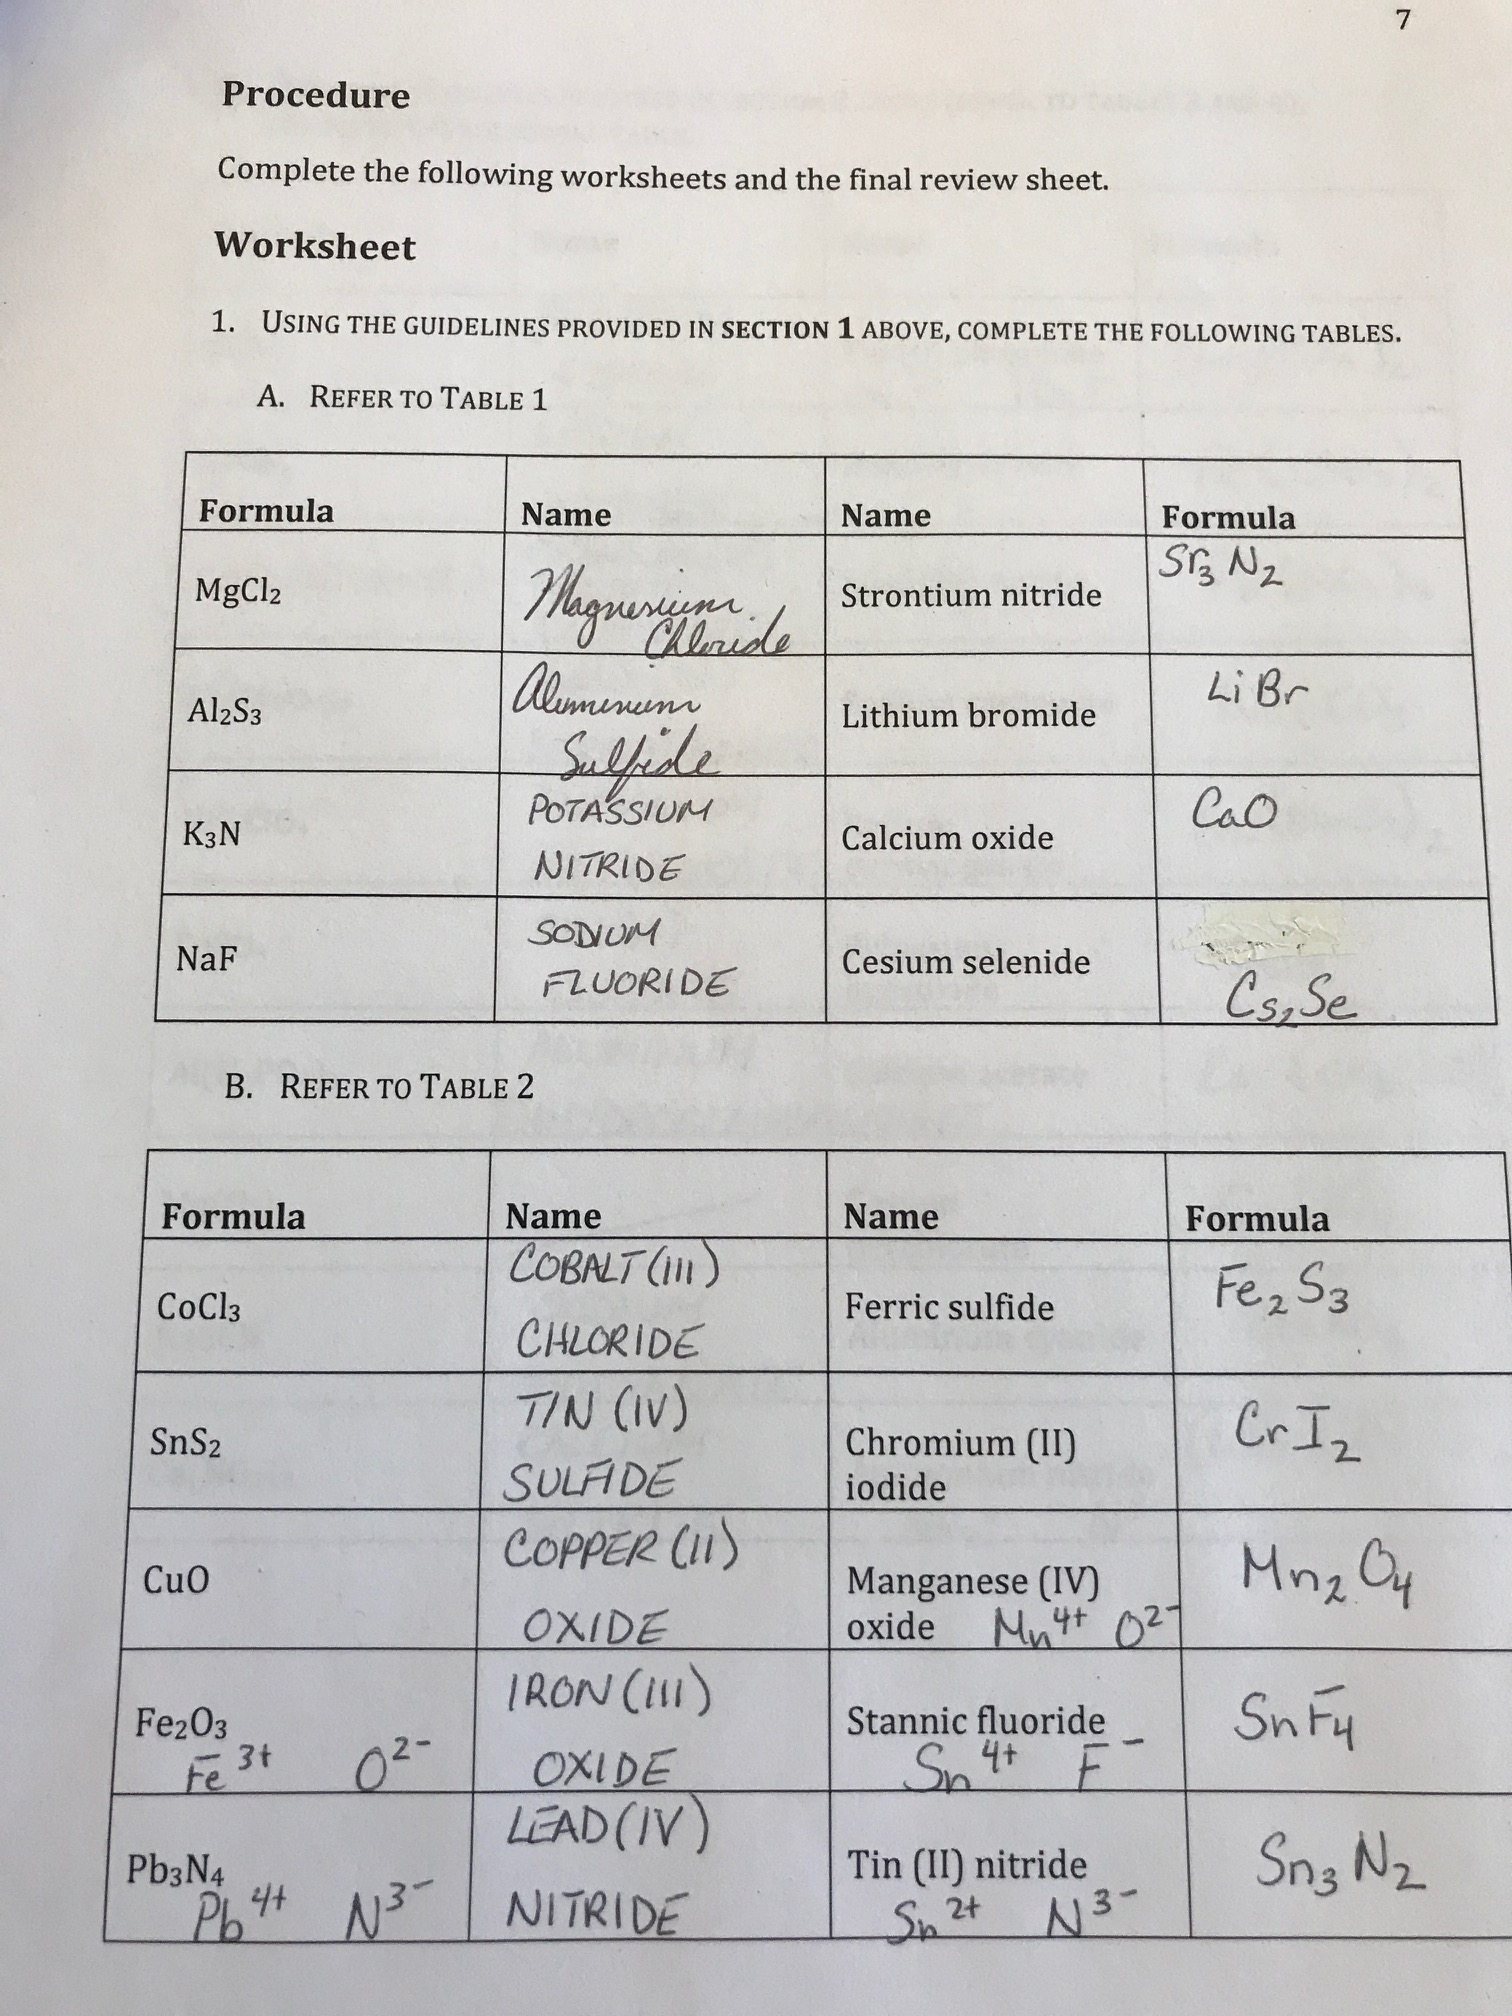 Chemistry 1a Nomenclature Worksheet - Ivuyteq